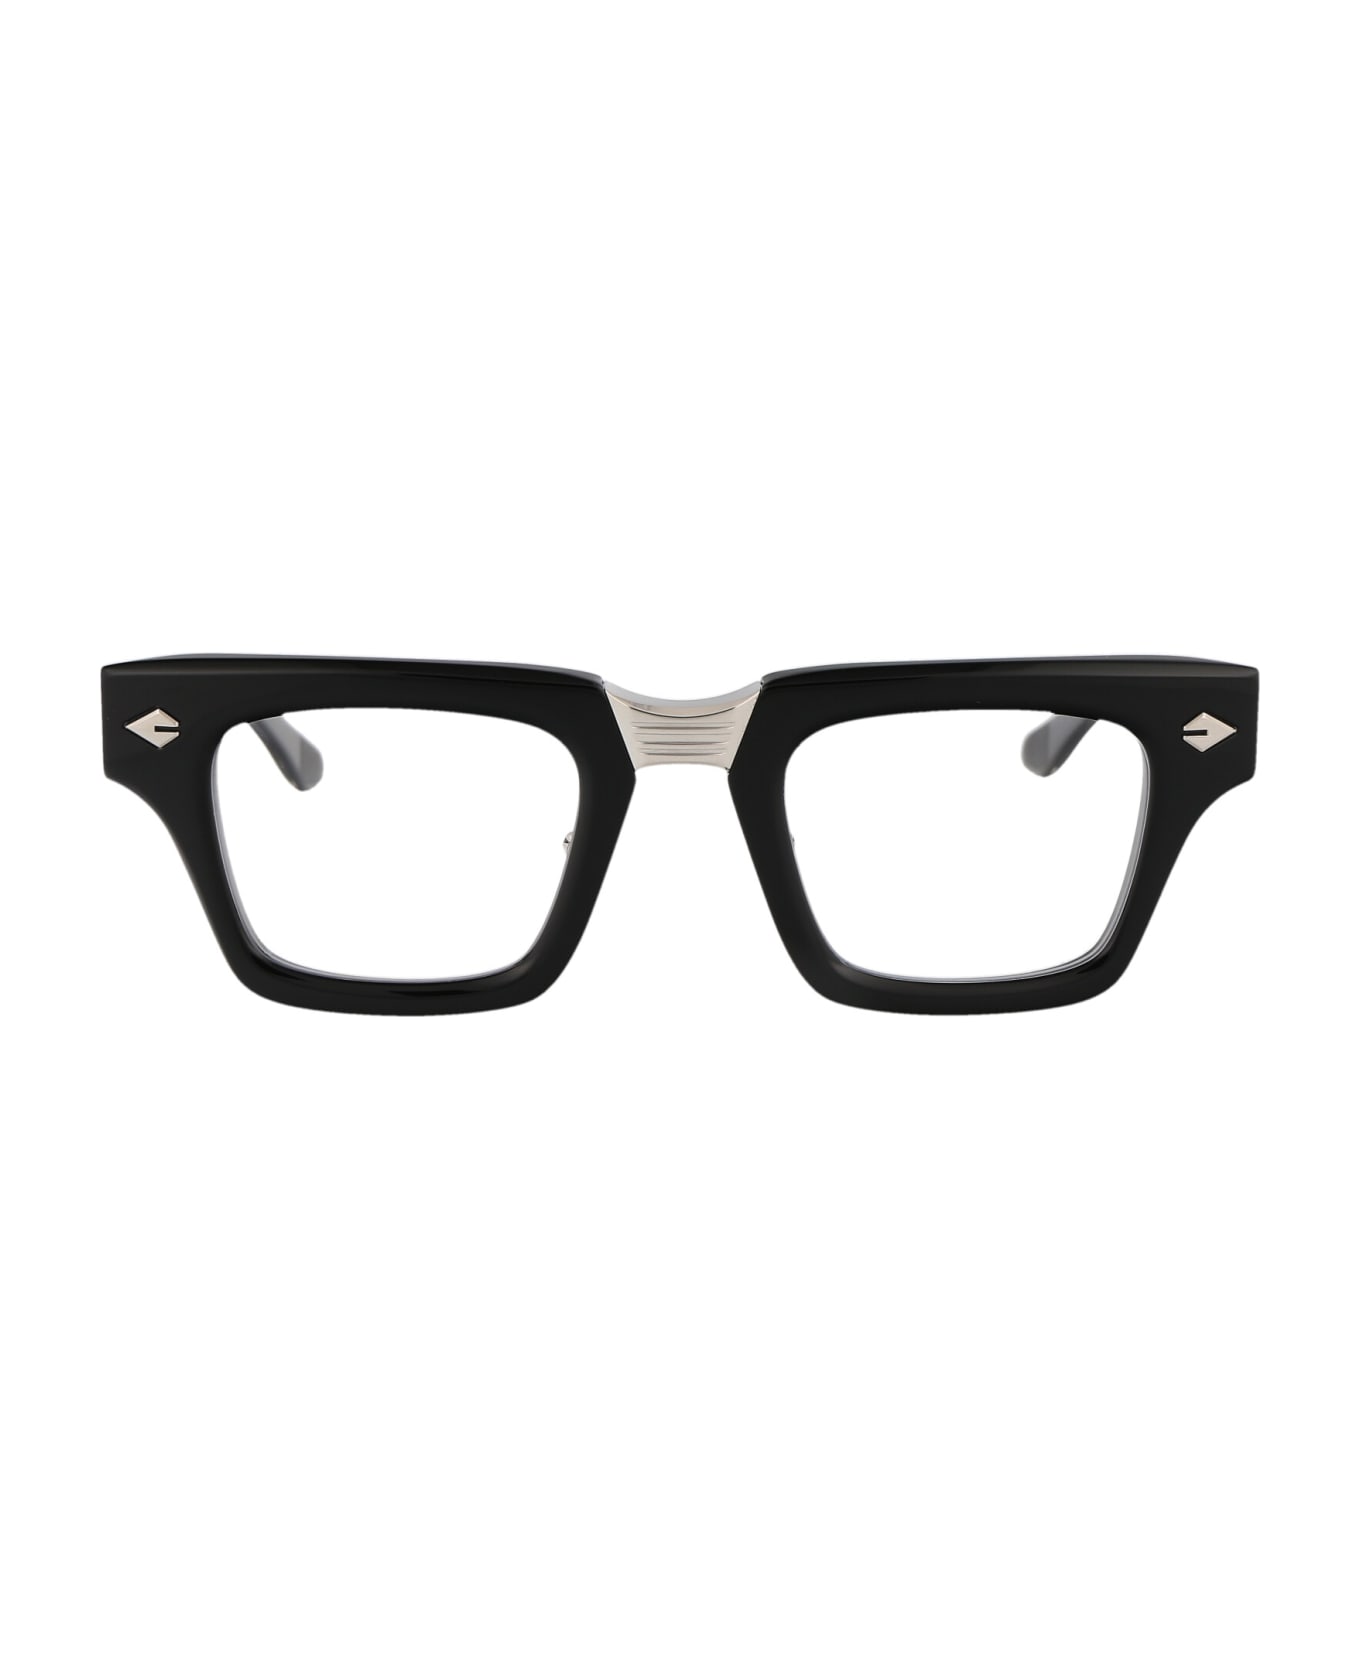 T Henri Corsa Rx Glasses - SHADOW アイウェア